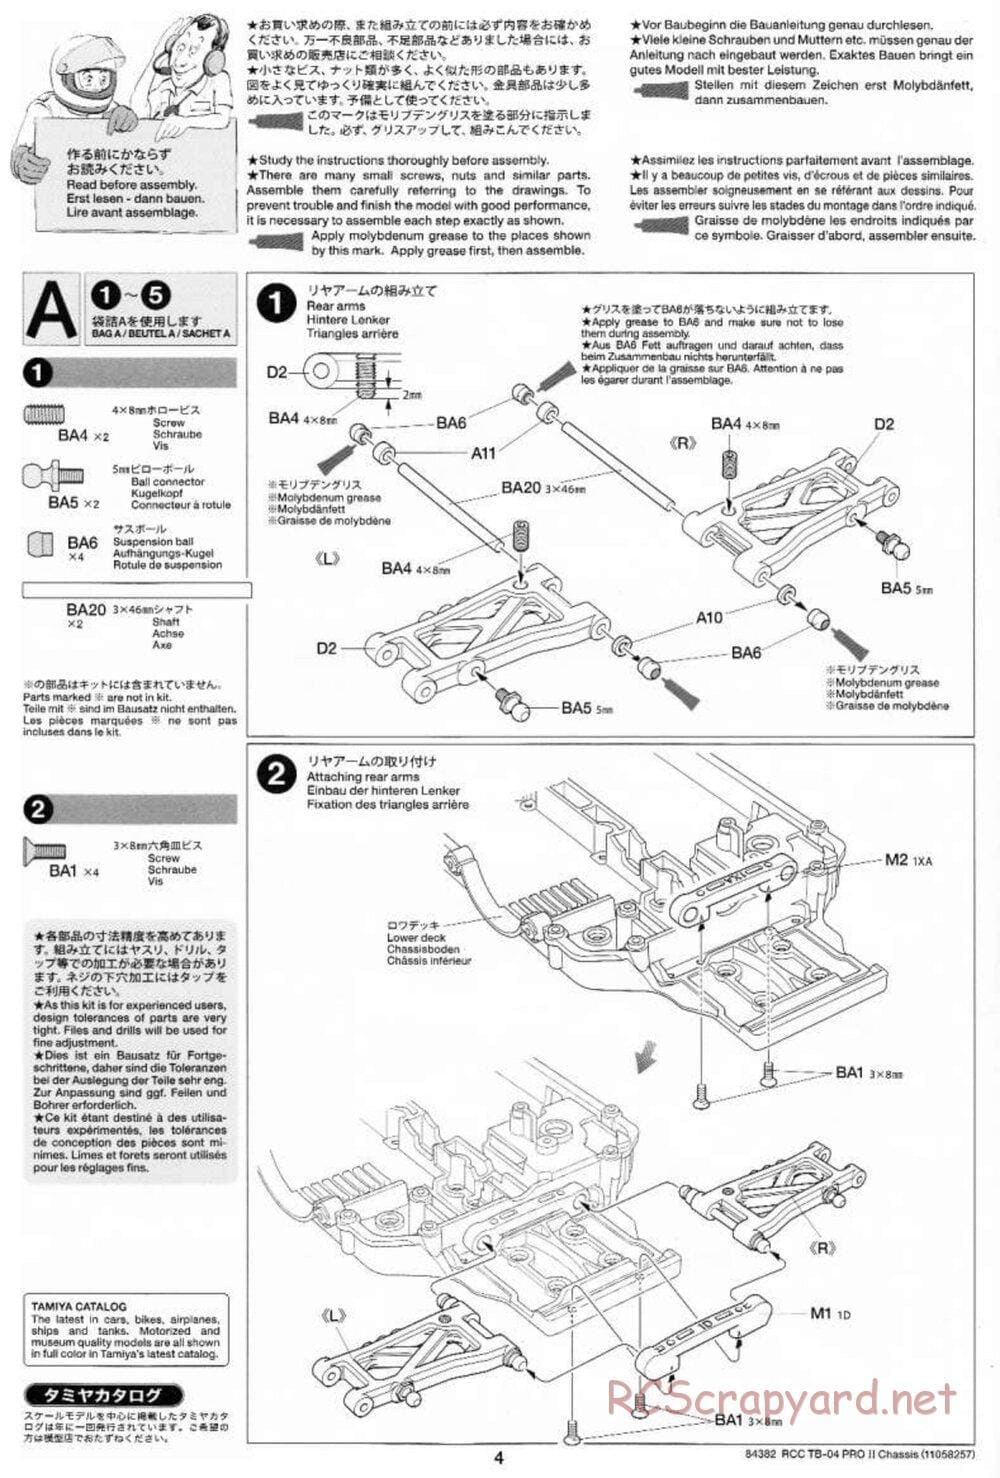 Tamiya - TB-04 Pro II Chassis - Manual - Page 4